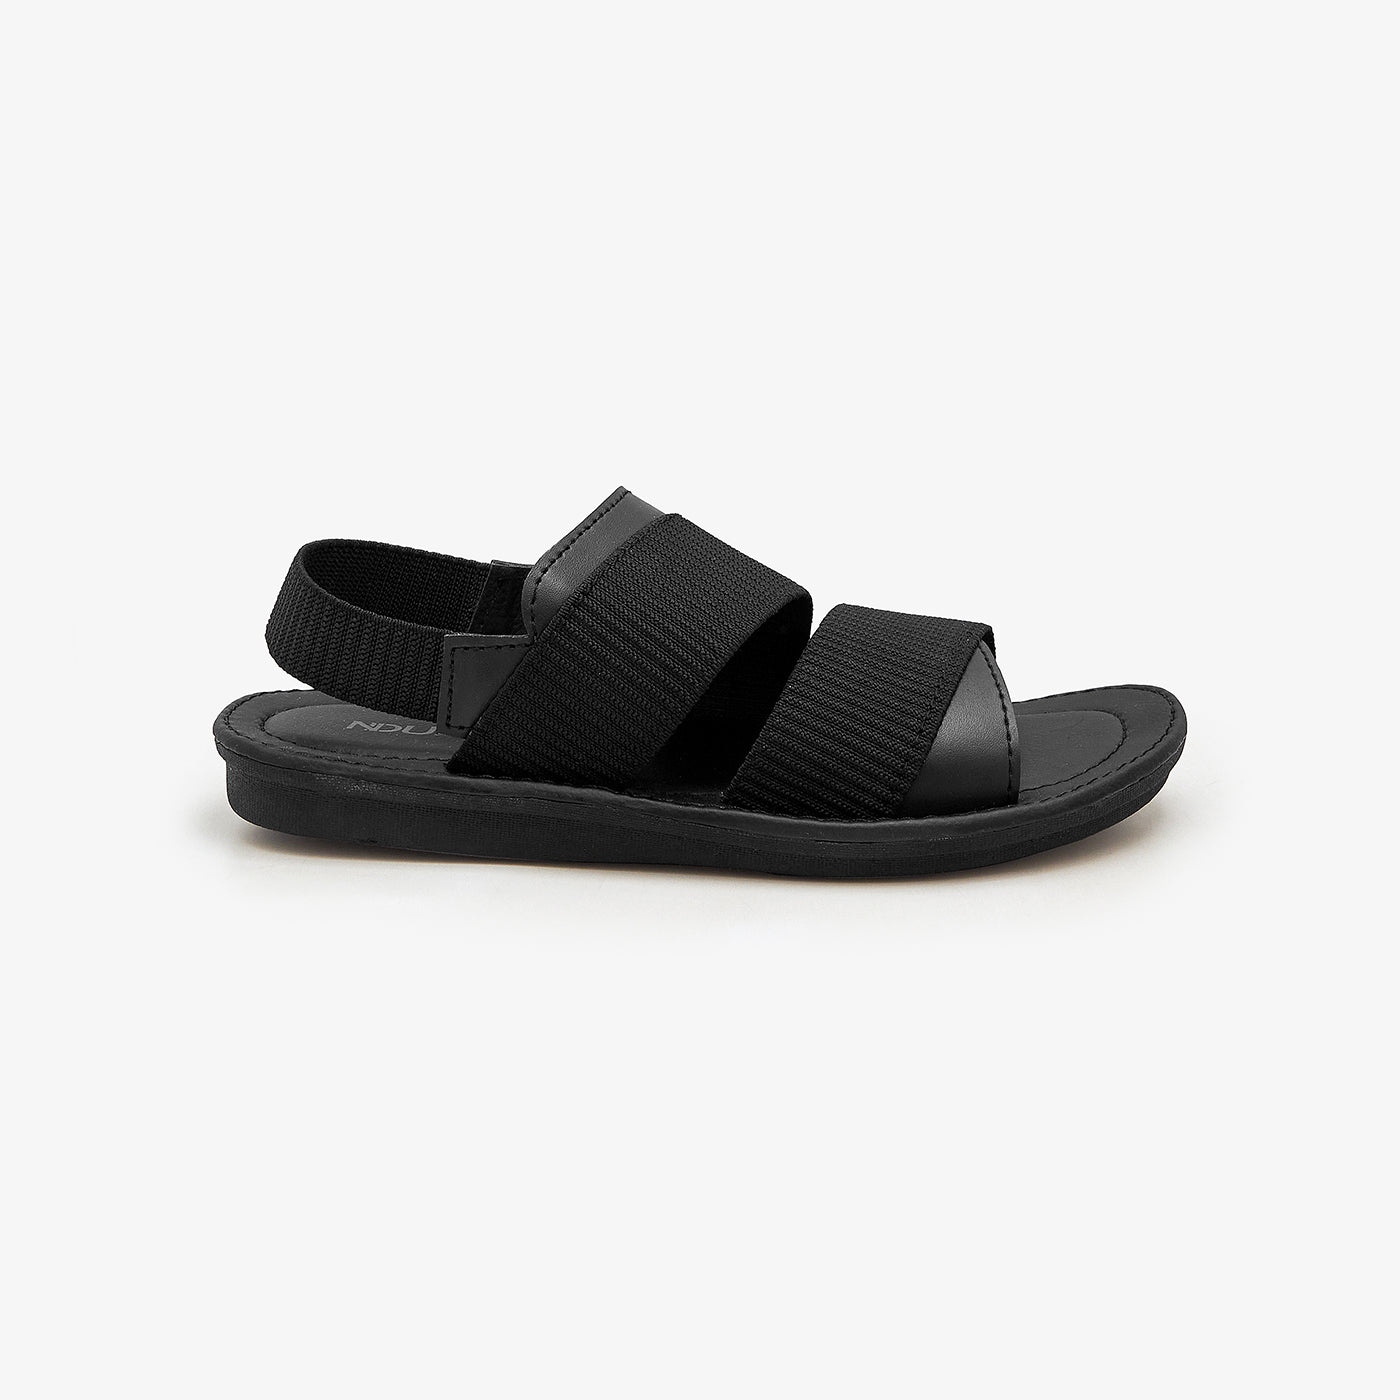 Men's Edgy Summer Sandals